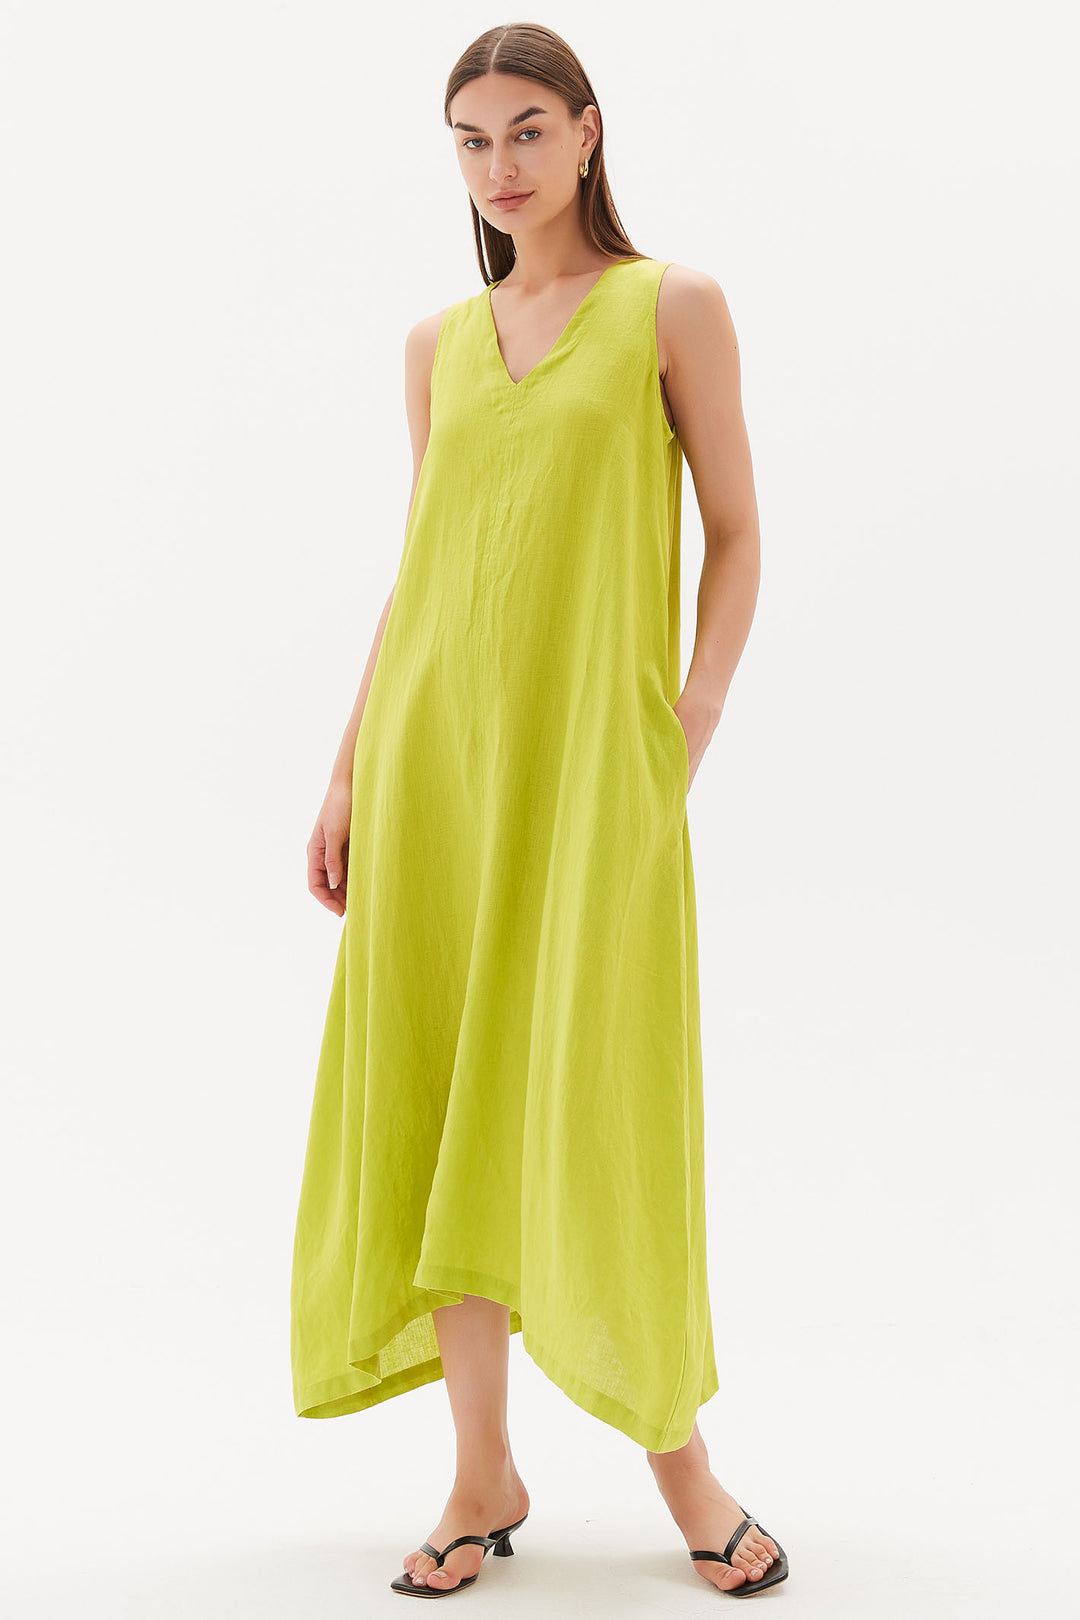 Tirelli 3224 Easy Sleeveless Midi Dress Linen Citrus Green - Dotique